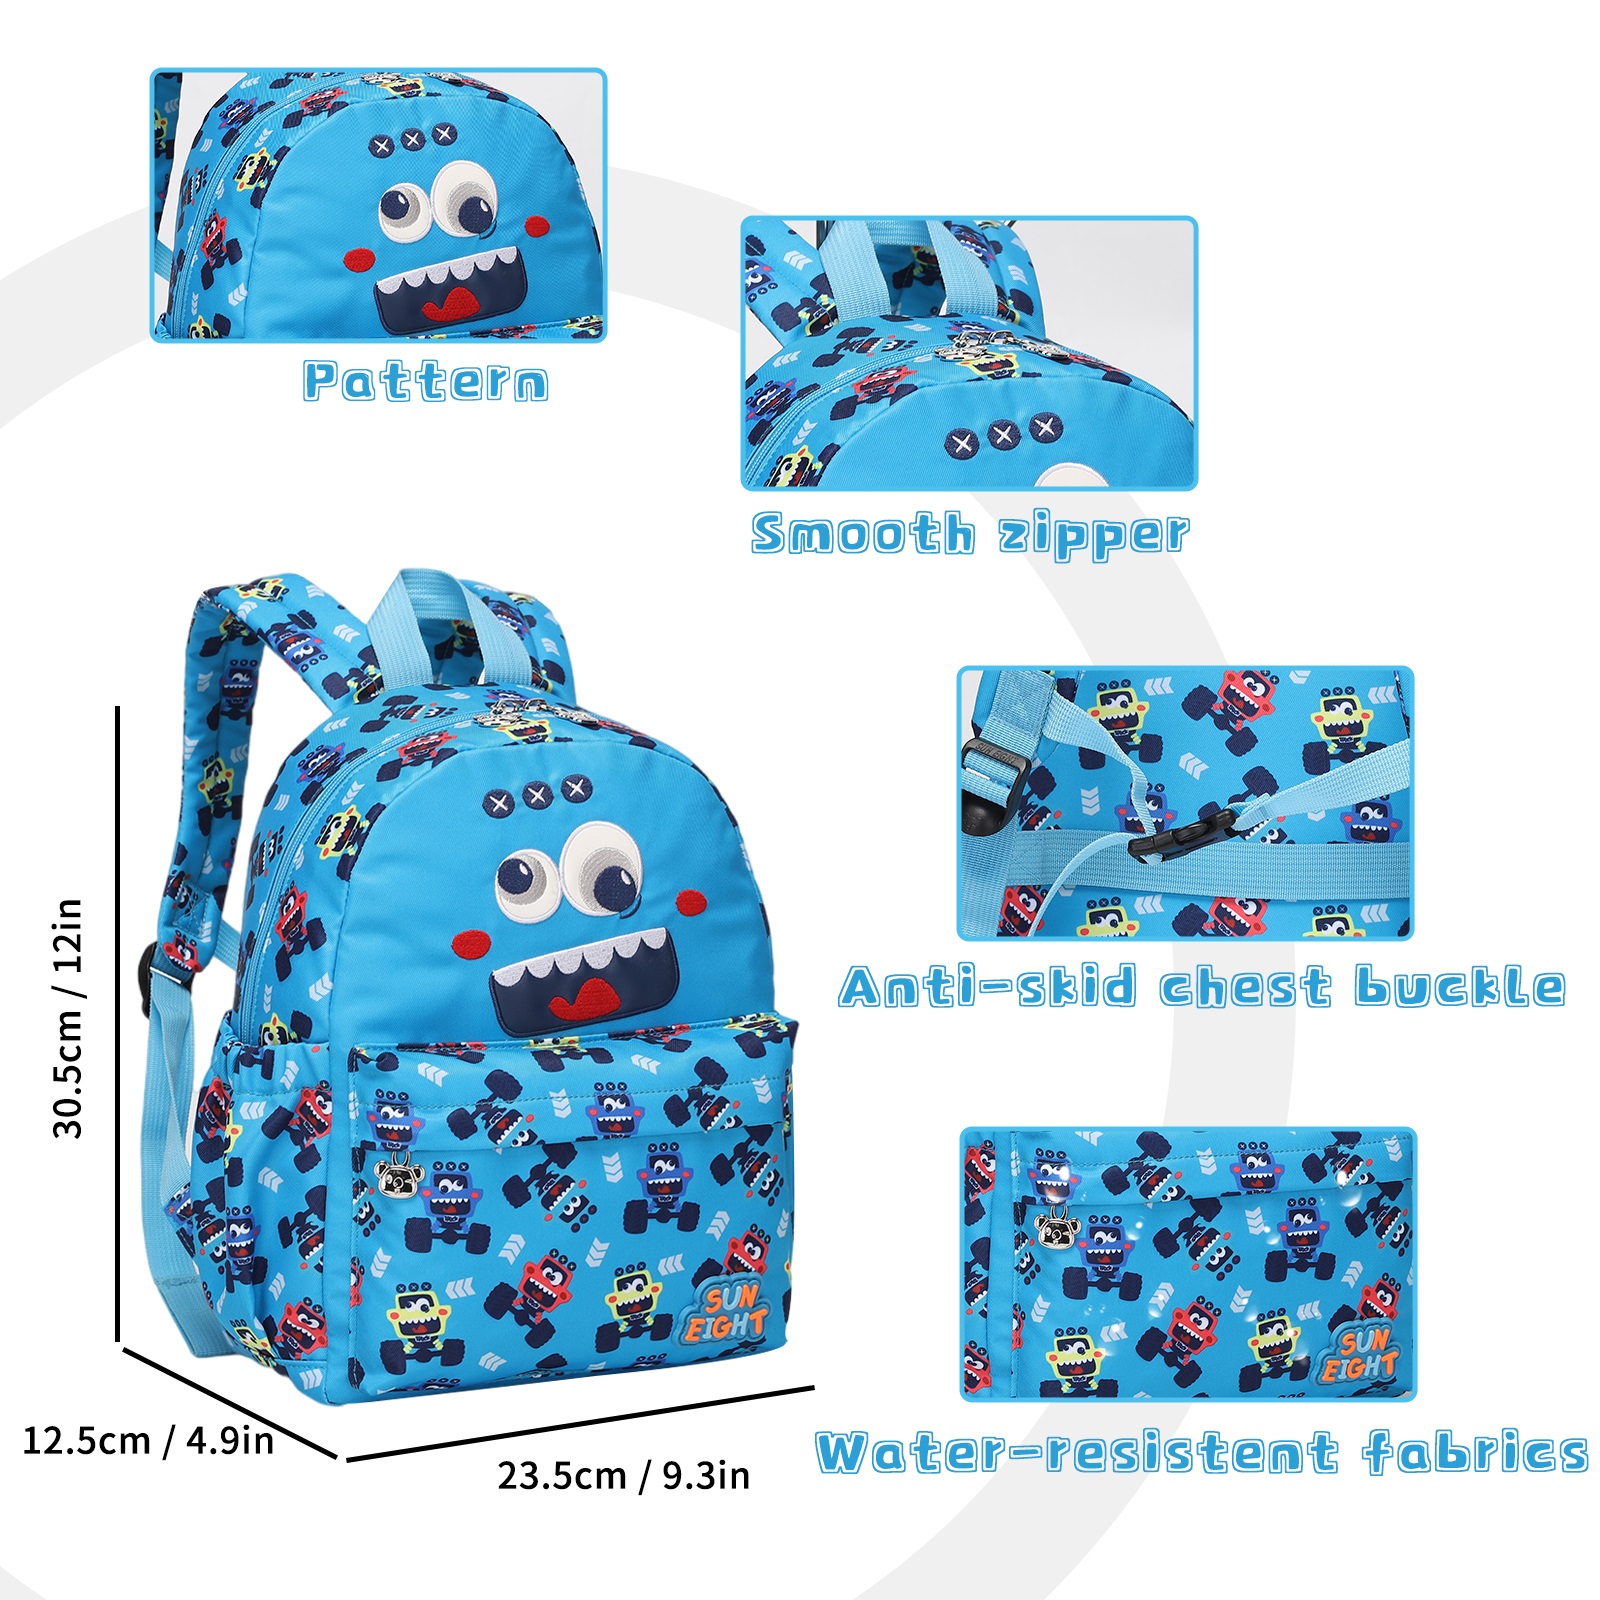 SUN EIGHT - Mochila para niñas y niños, linda mochila escolar de